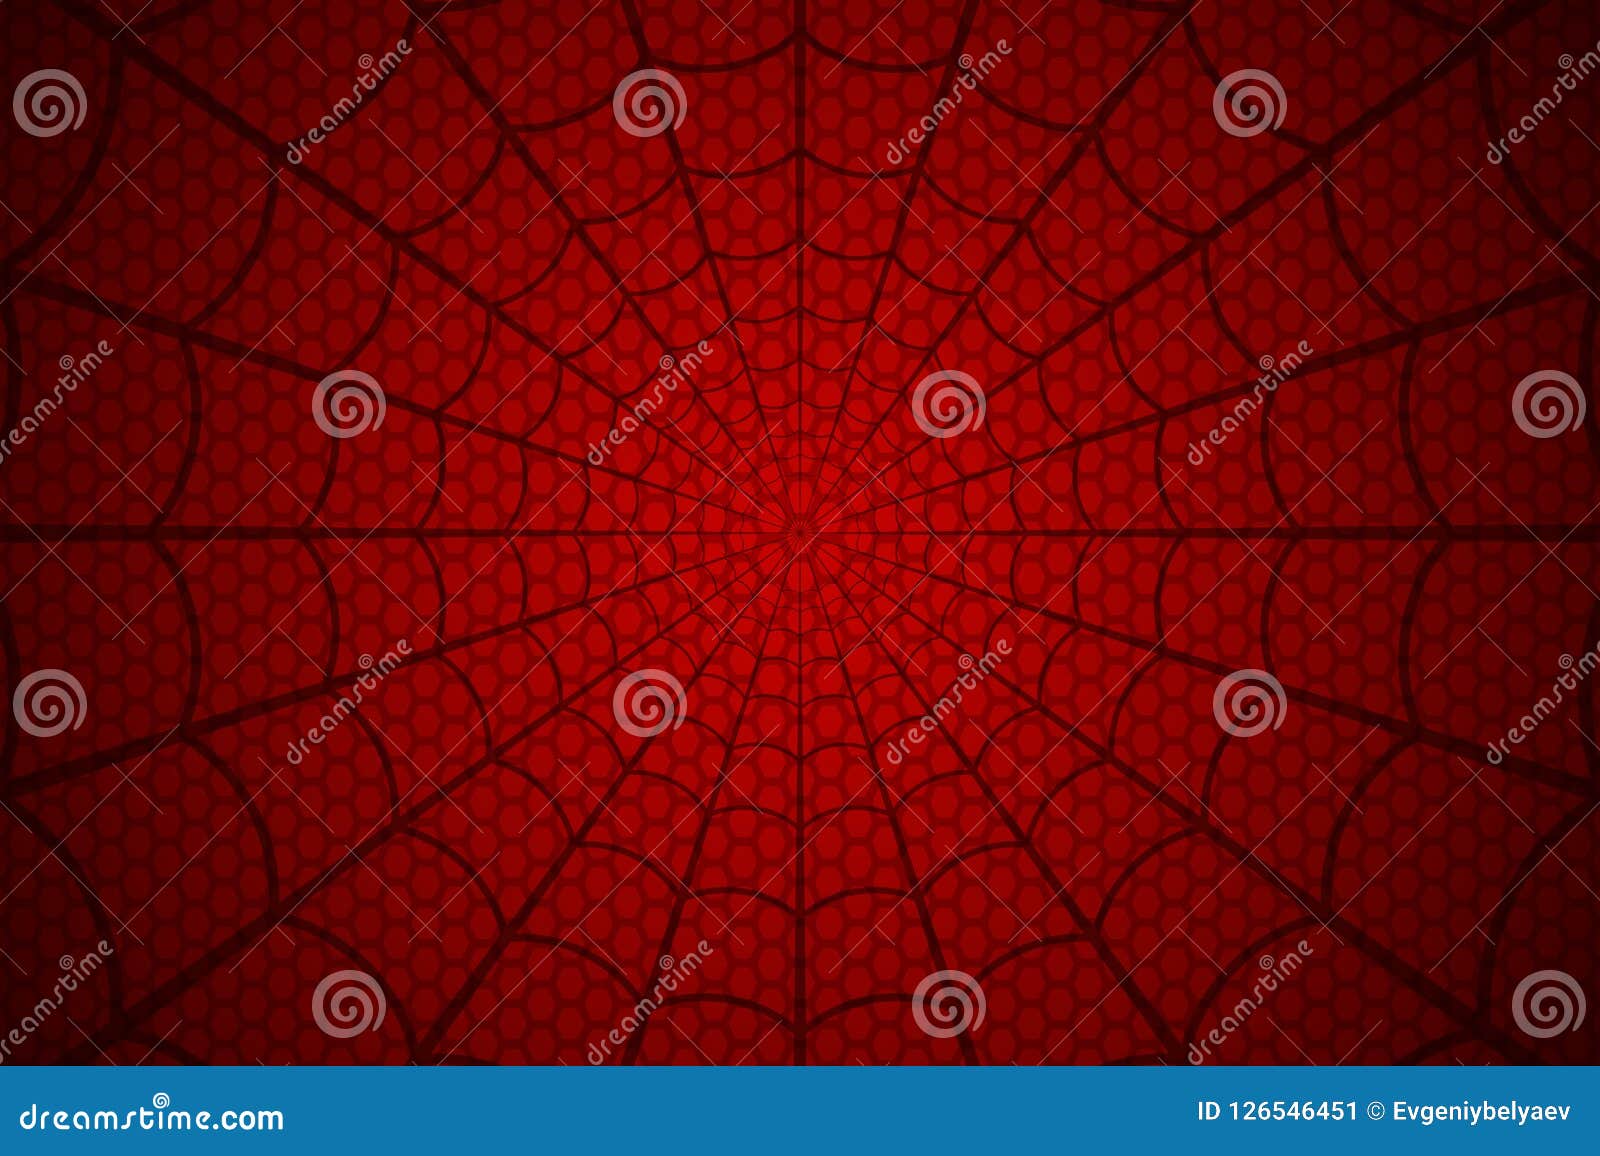 spider web. cobweb on red background.  